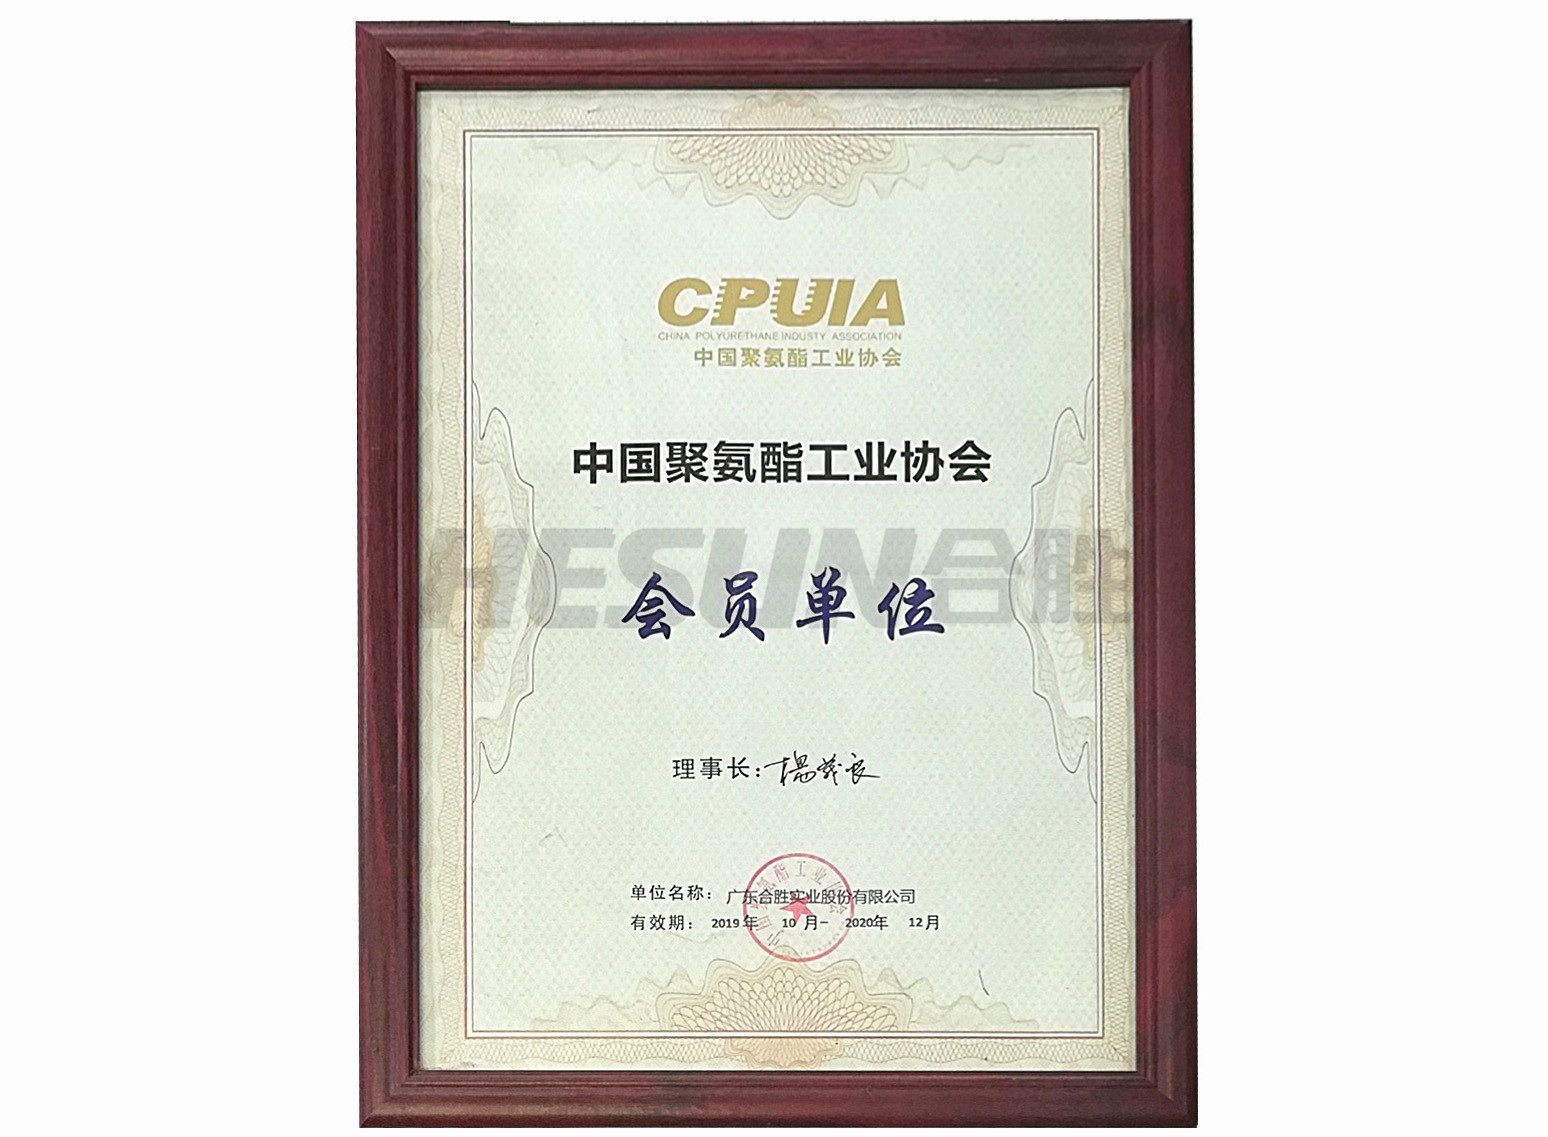 Member of China Polyurethane Industry Association